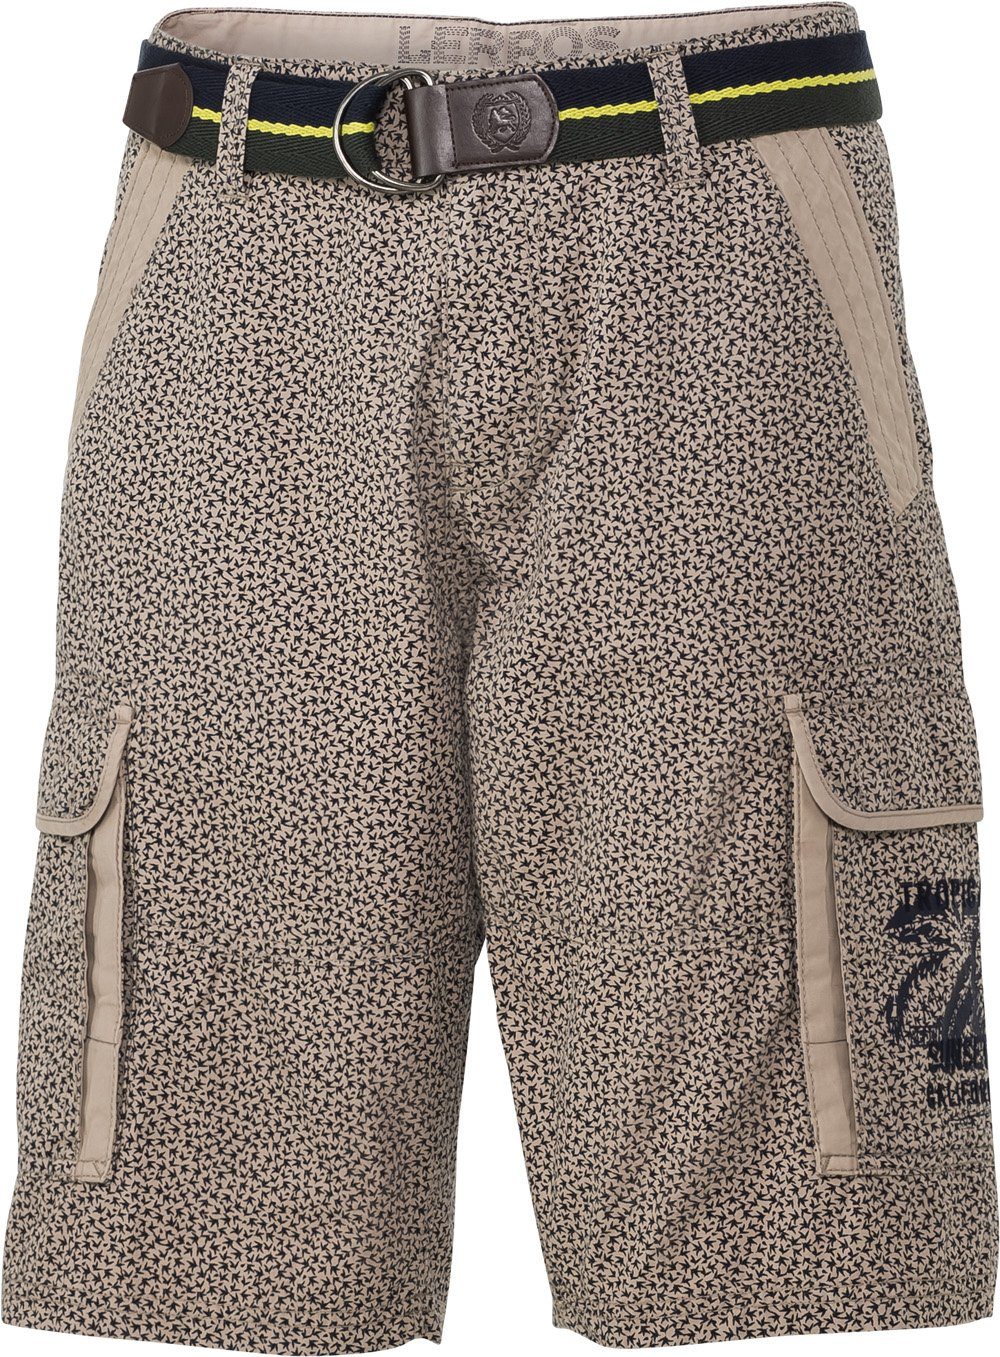 Textilgürtel trendiges LERROS Minimalprint, inklusive Cargobermudas Muster mit